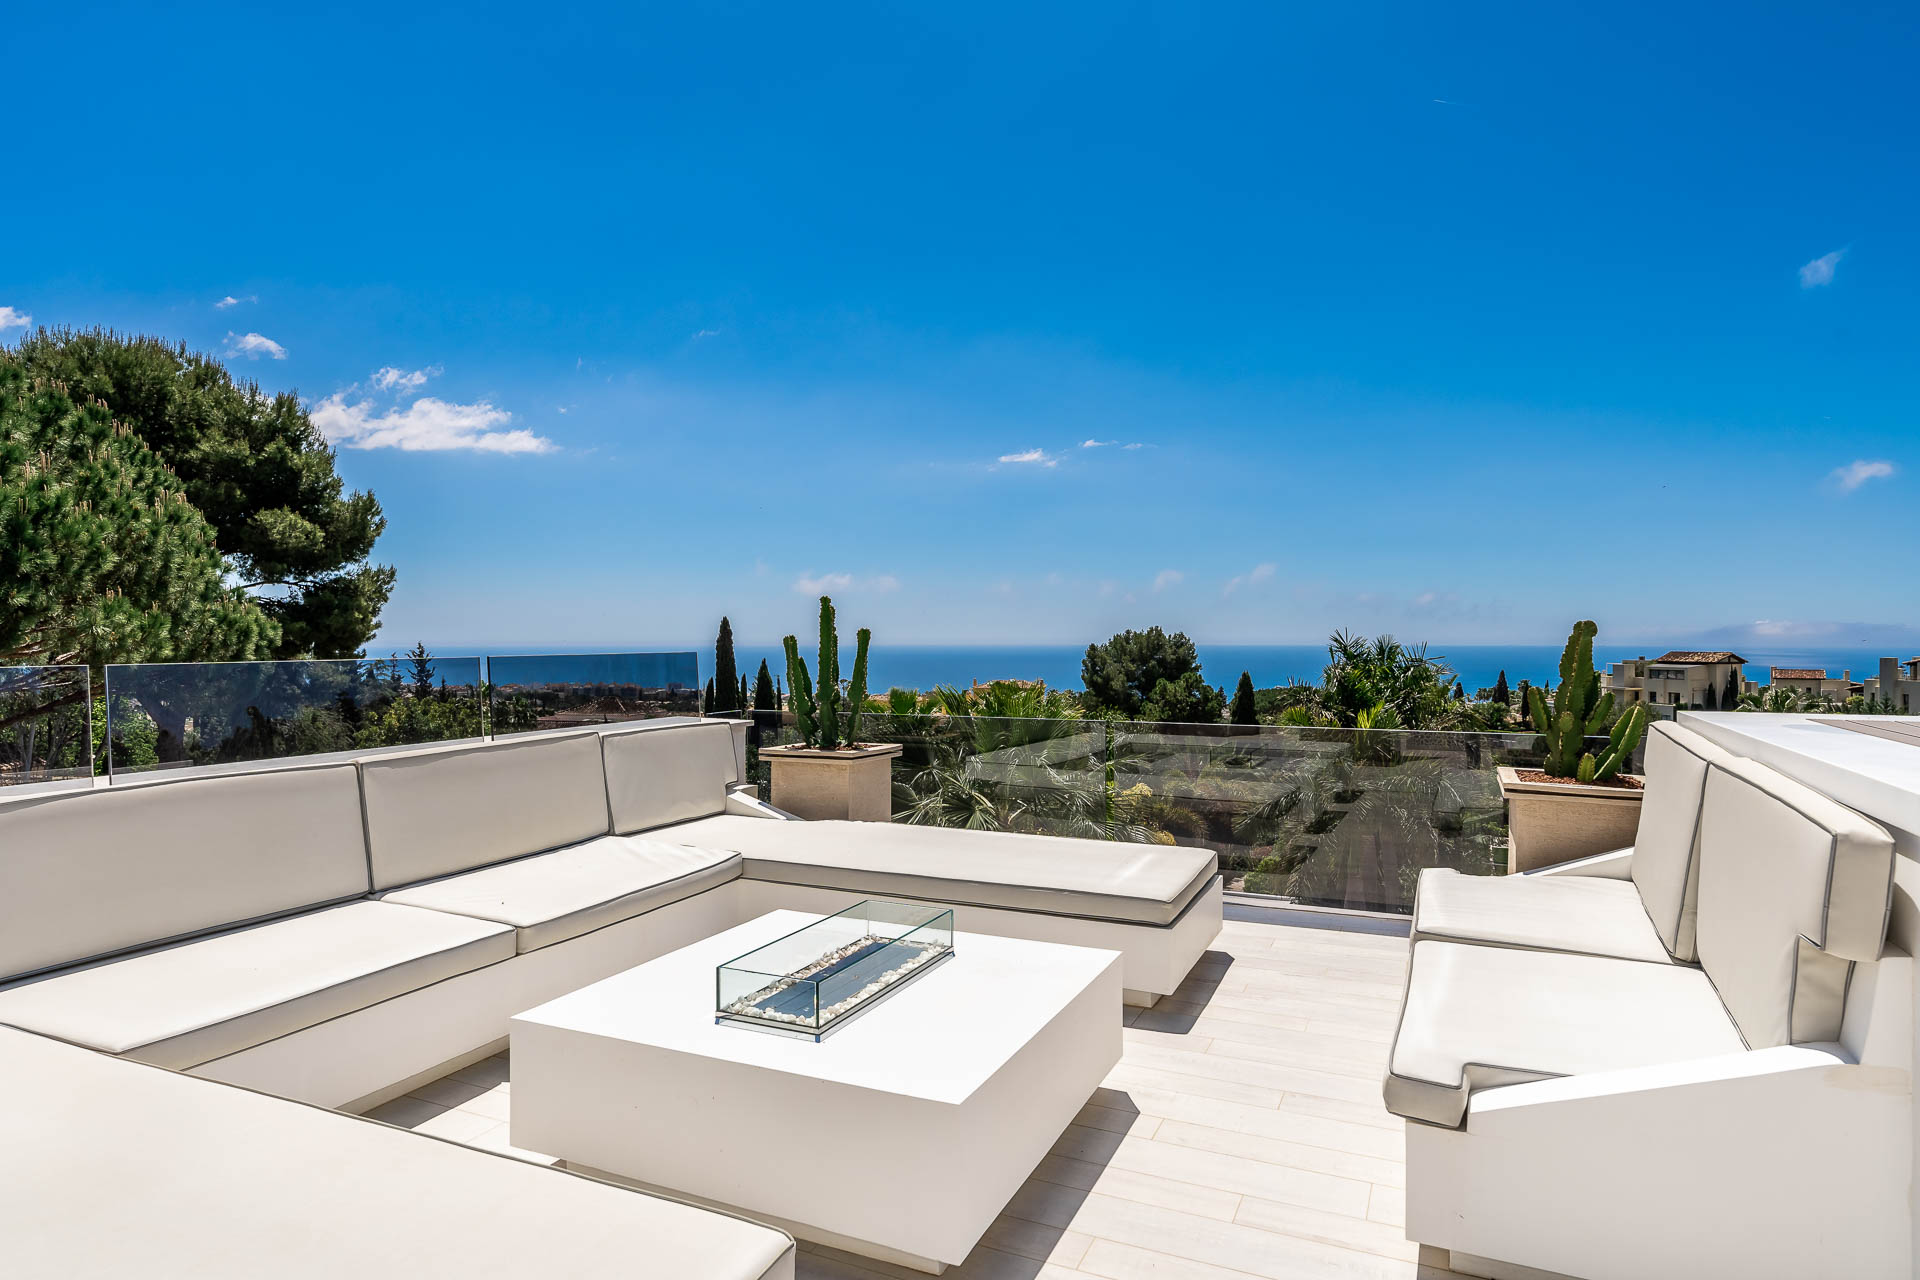 Luxurious retreat in Marbella